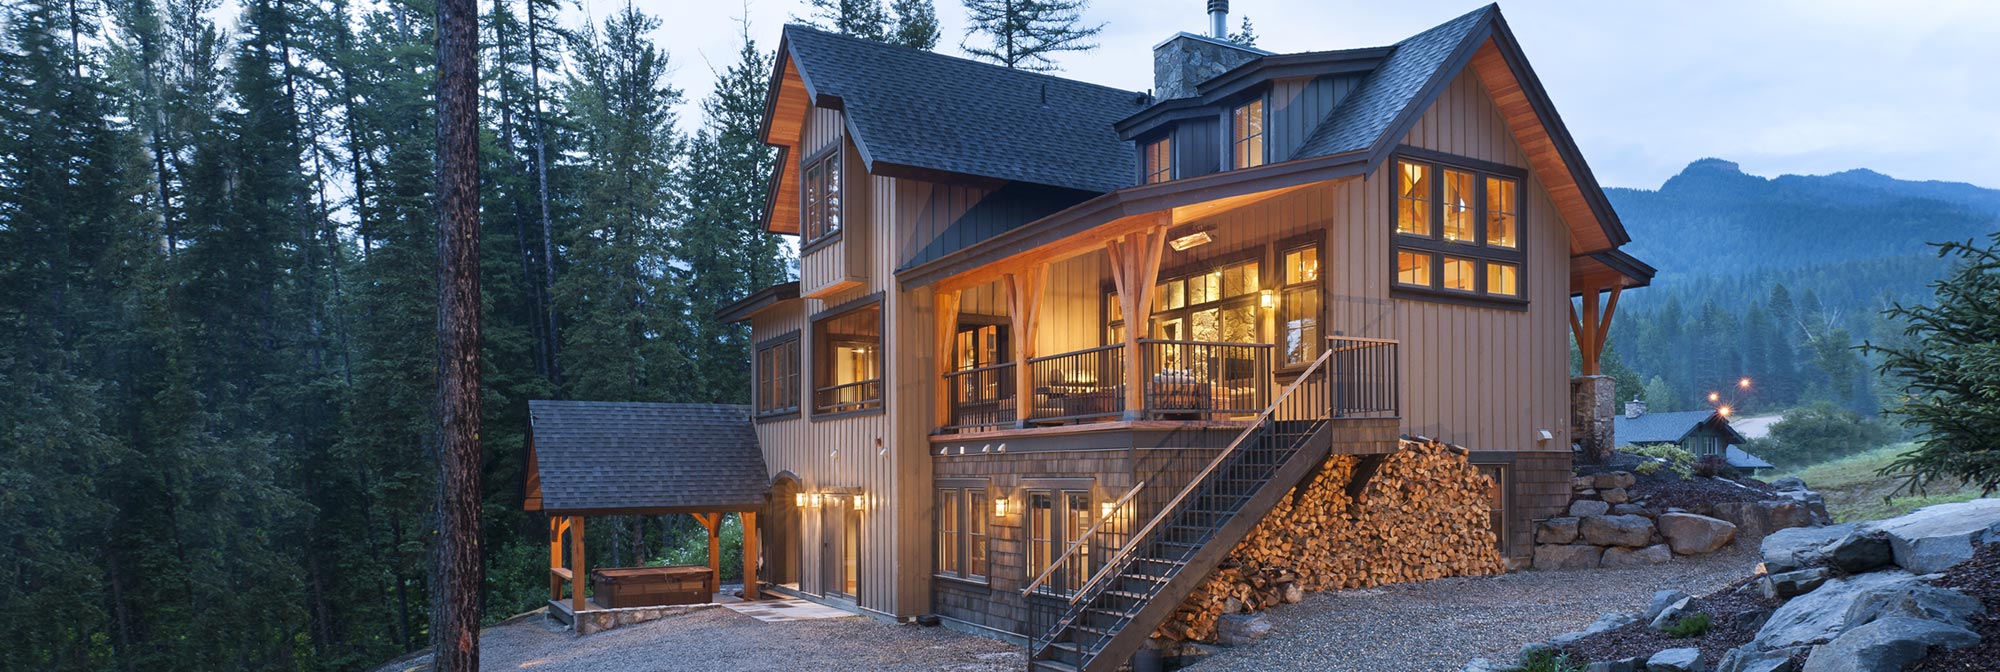 mountain timber home